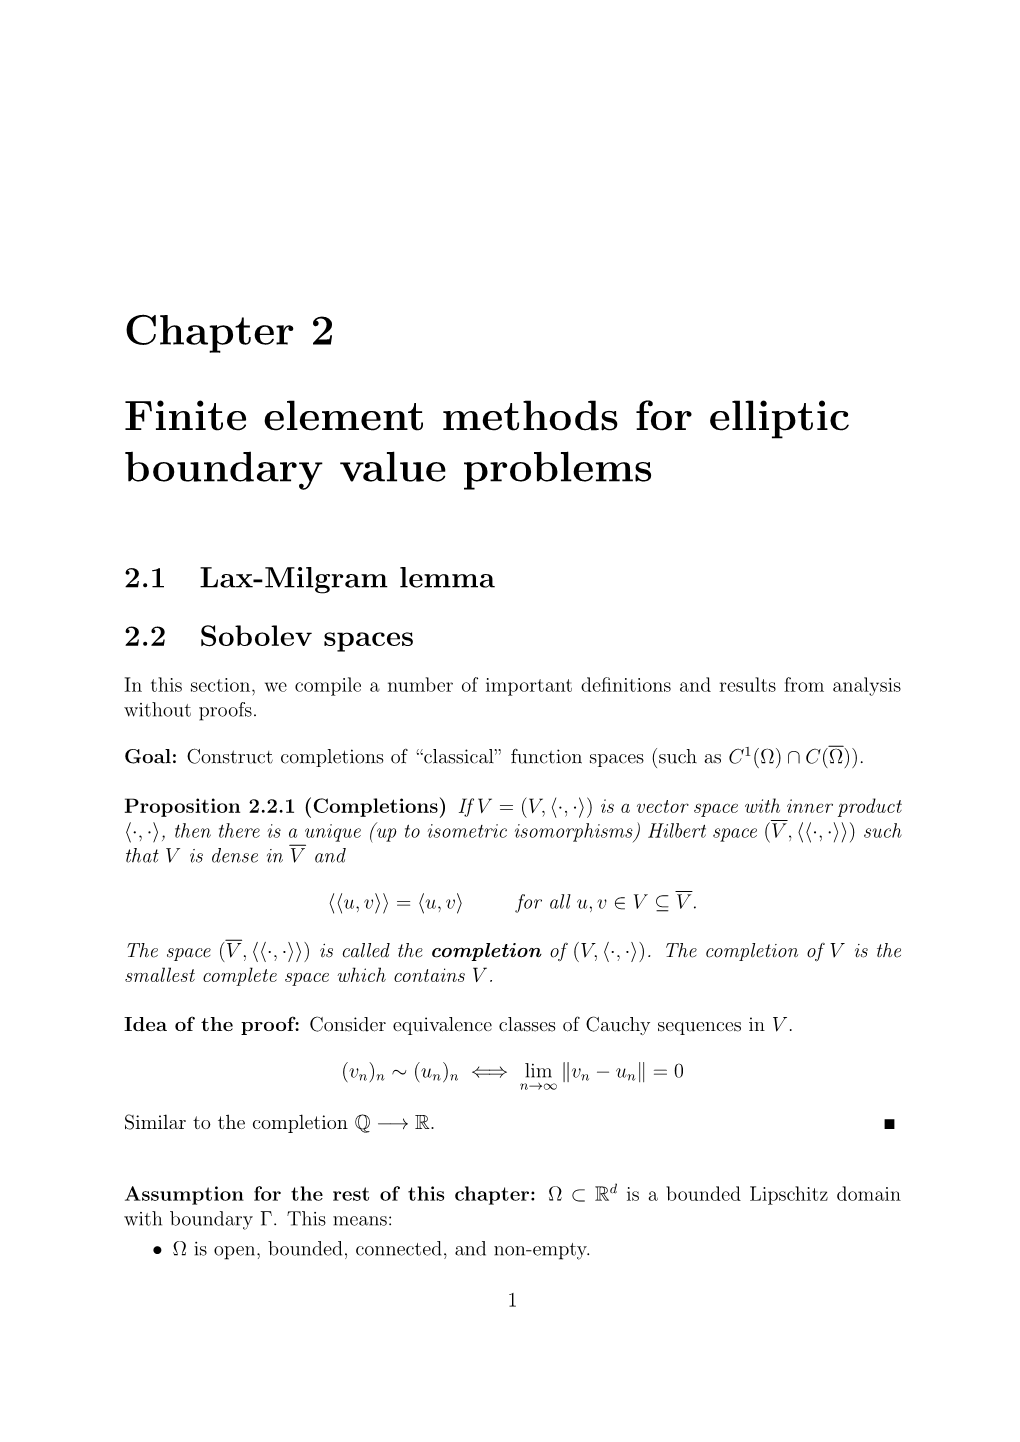 Chapter 2 Finite Element Methods for Elliptic Boundary Value Problems